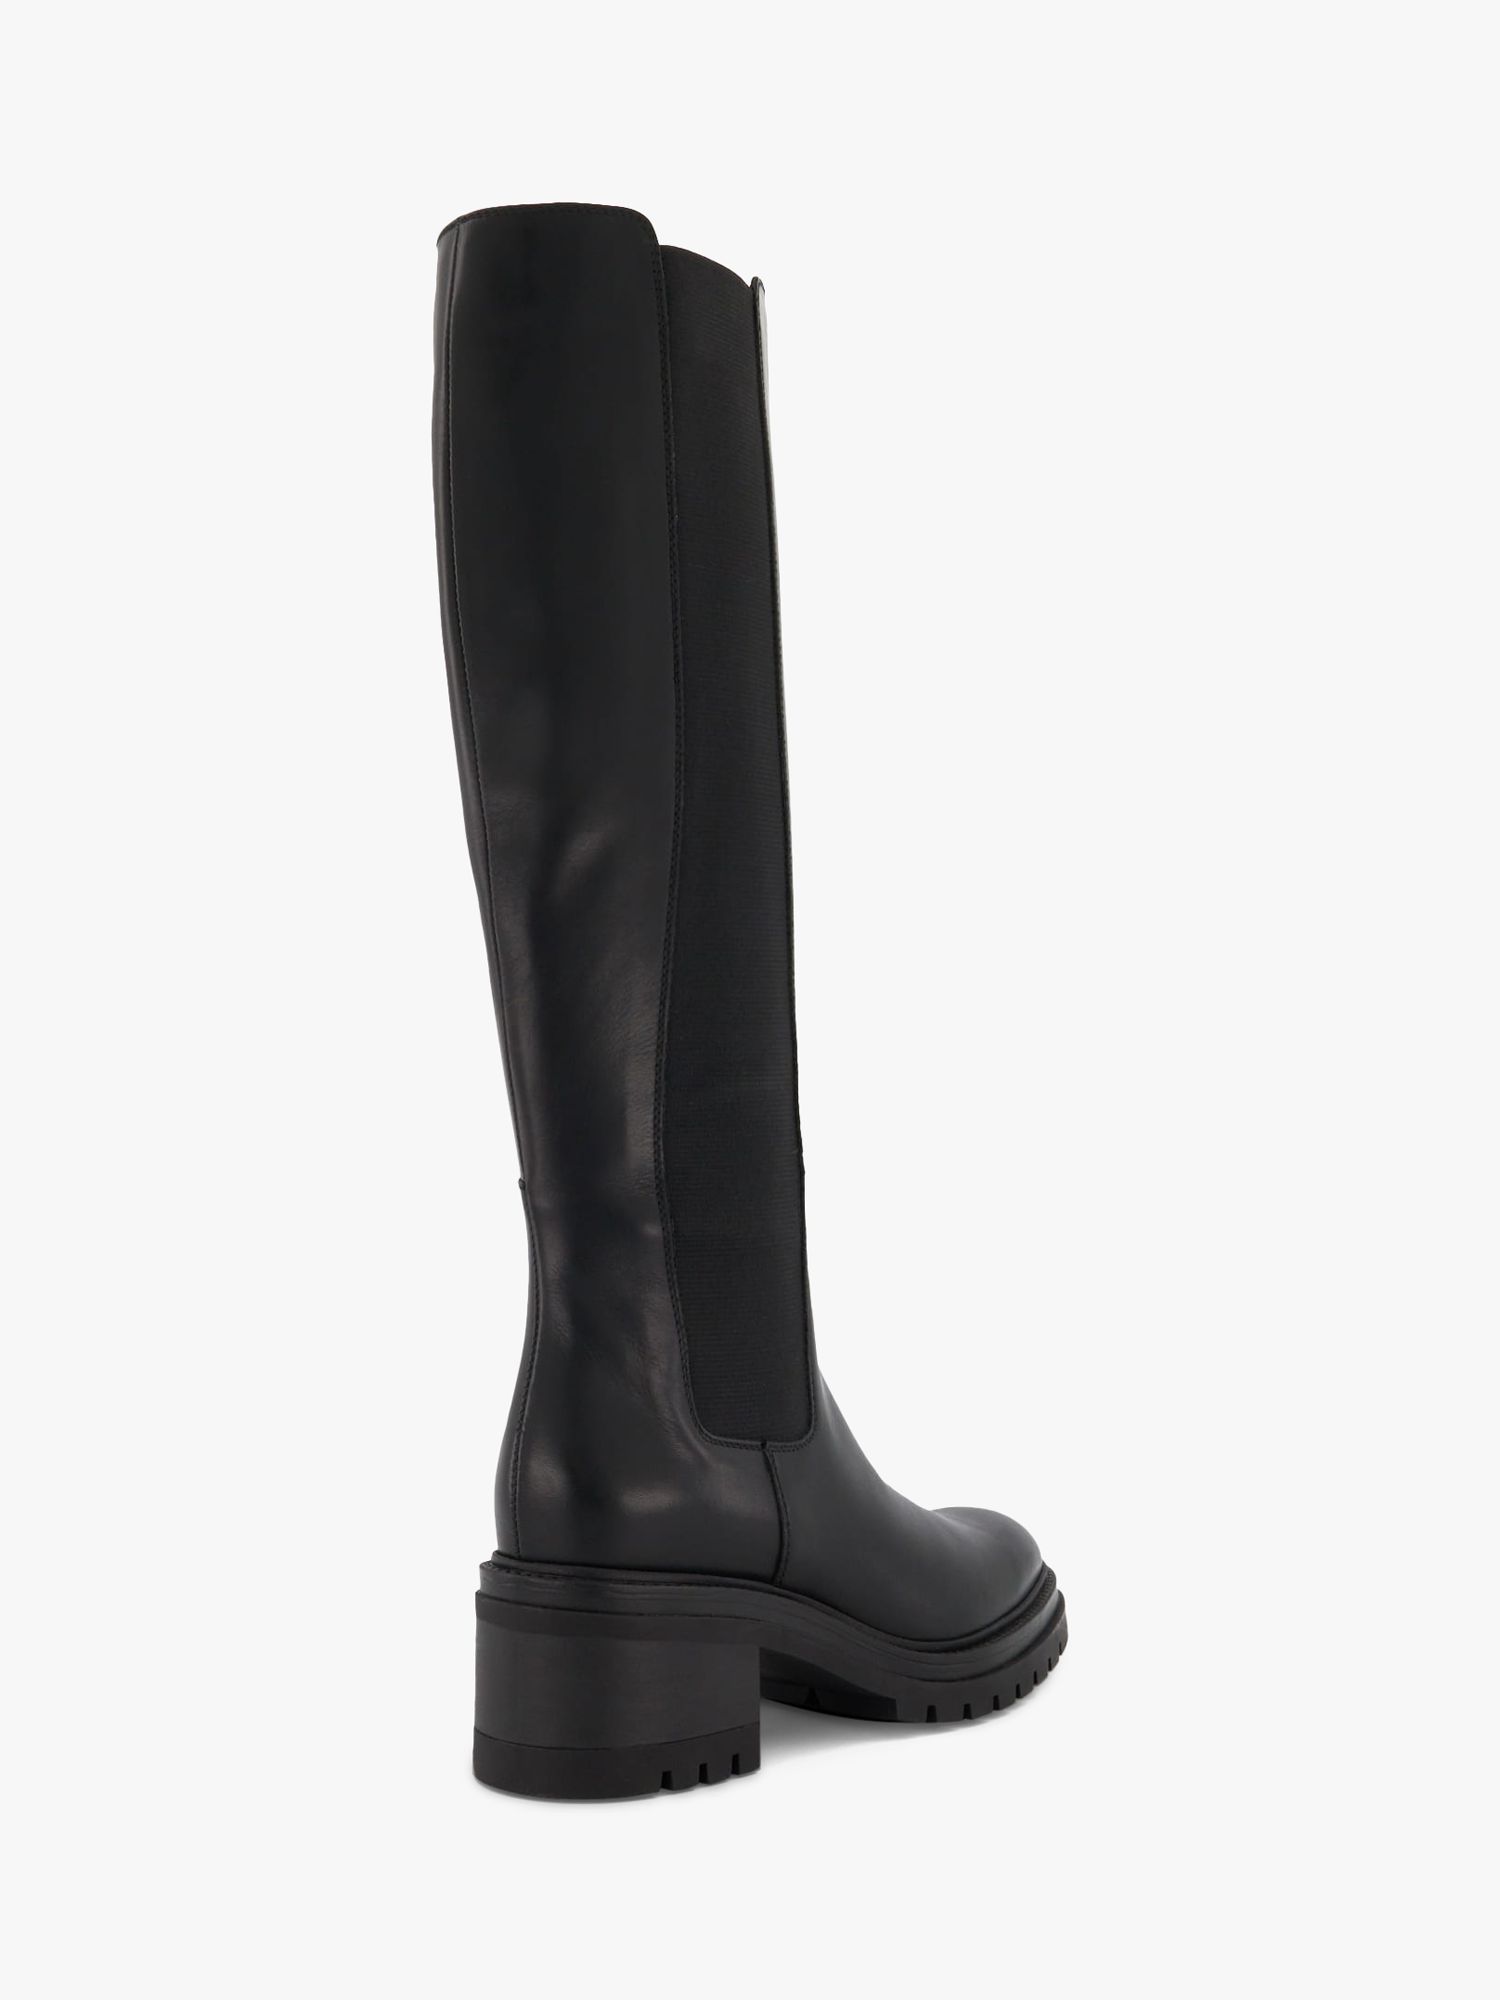 Dune Tesa Leather Pull On Knee Boots, Black at John Lewis & Partners